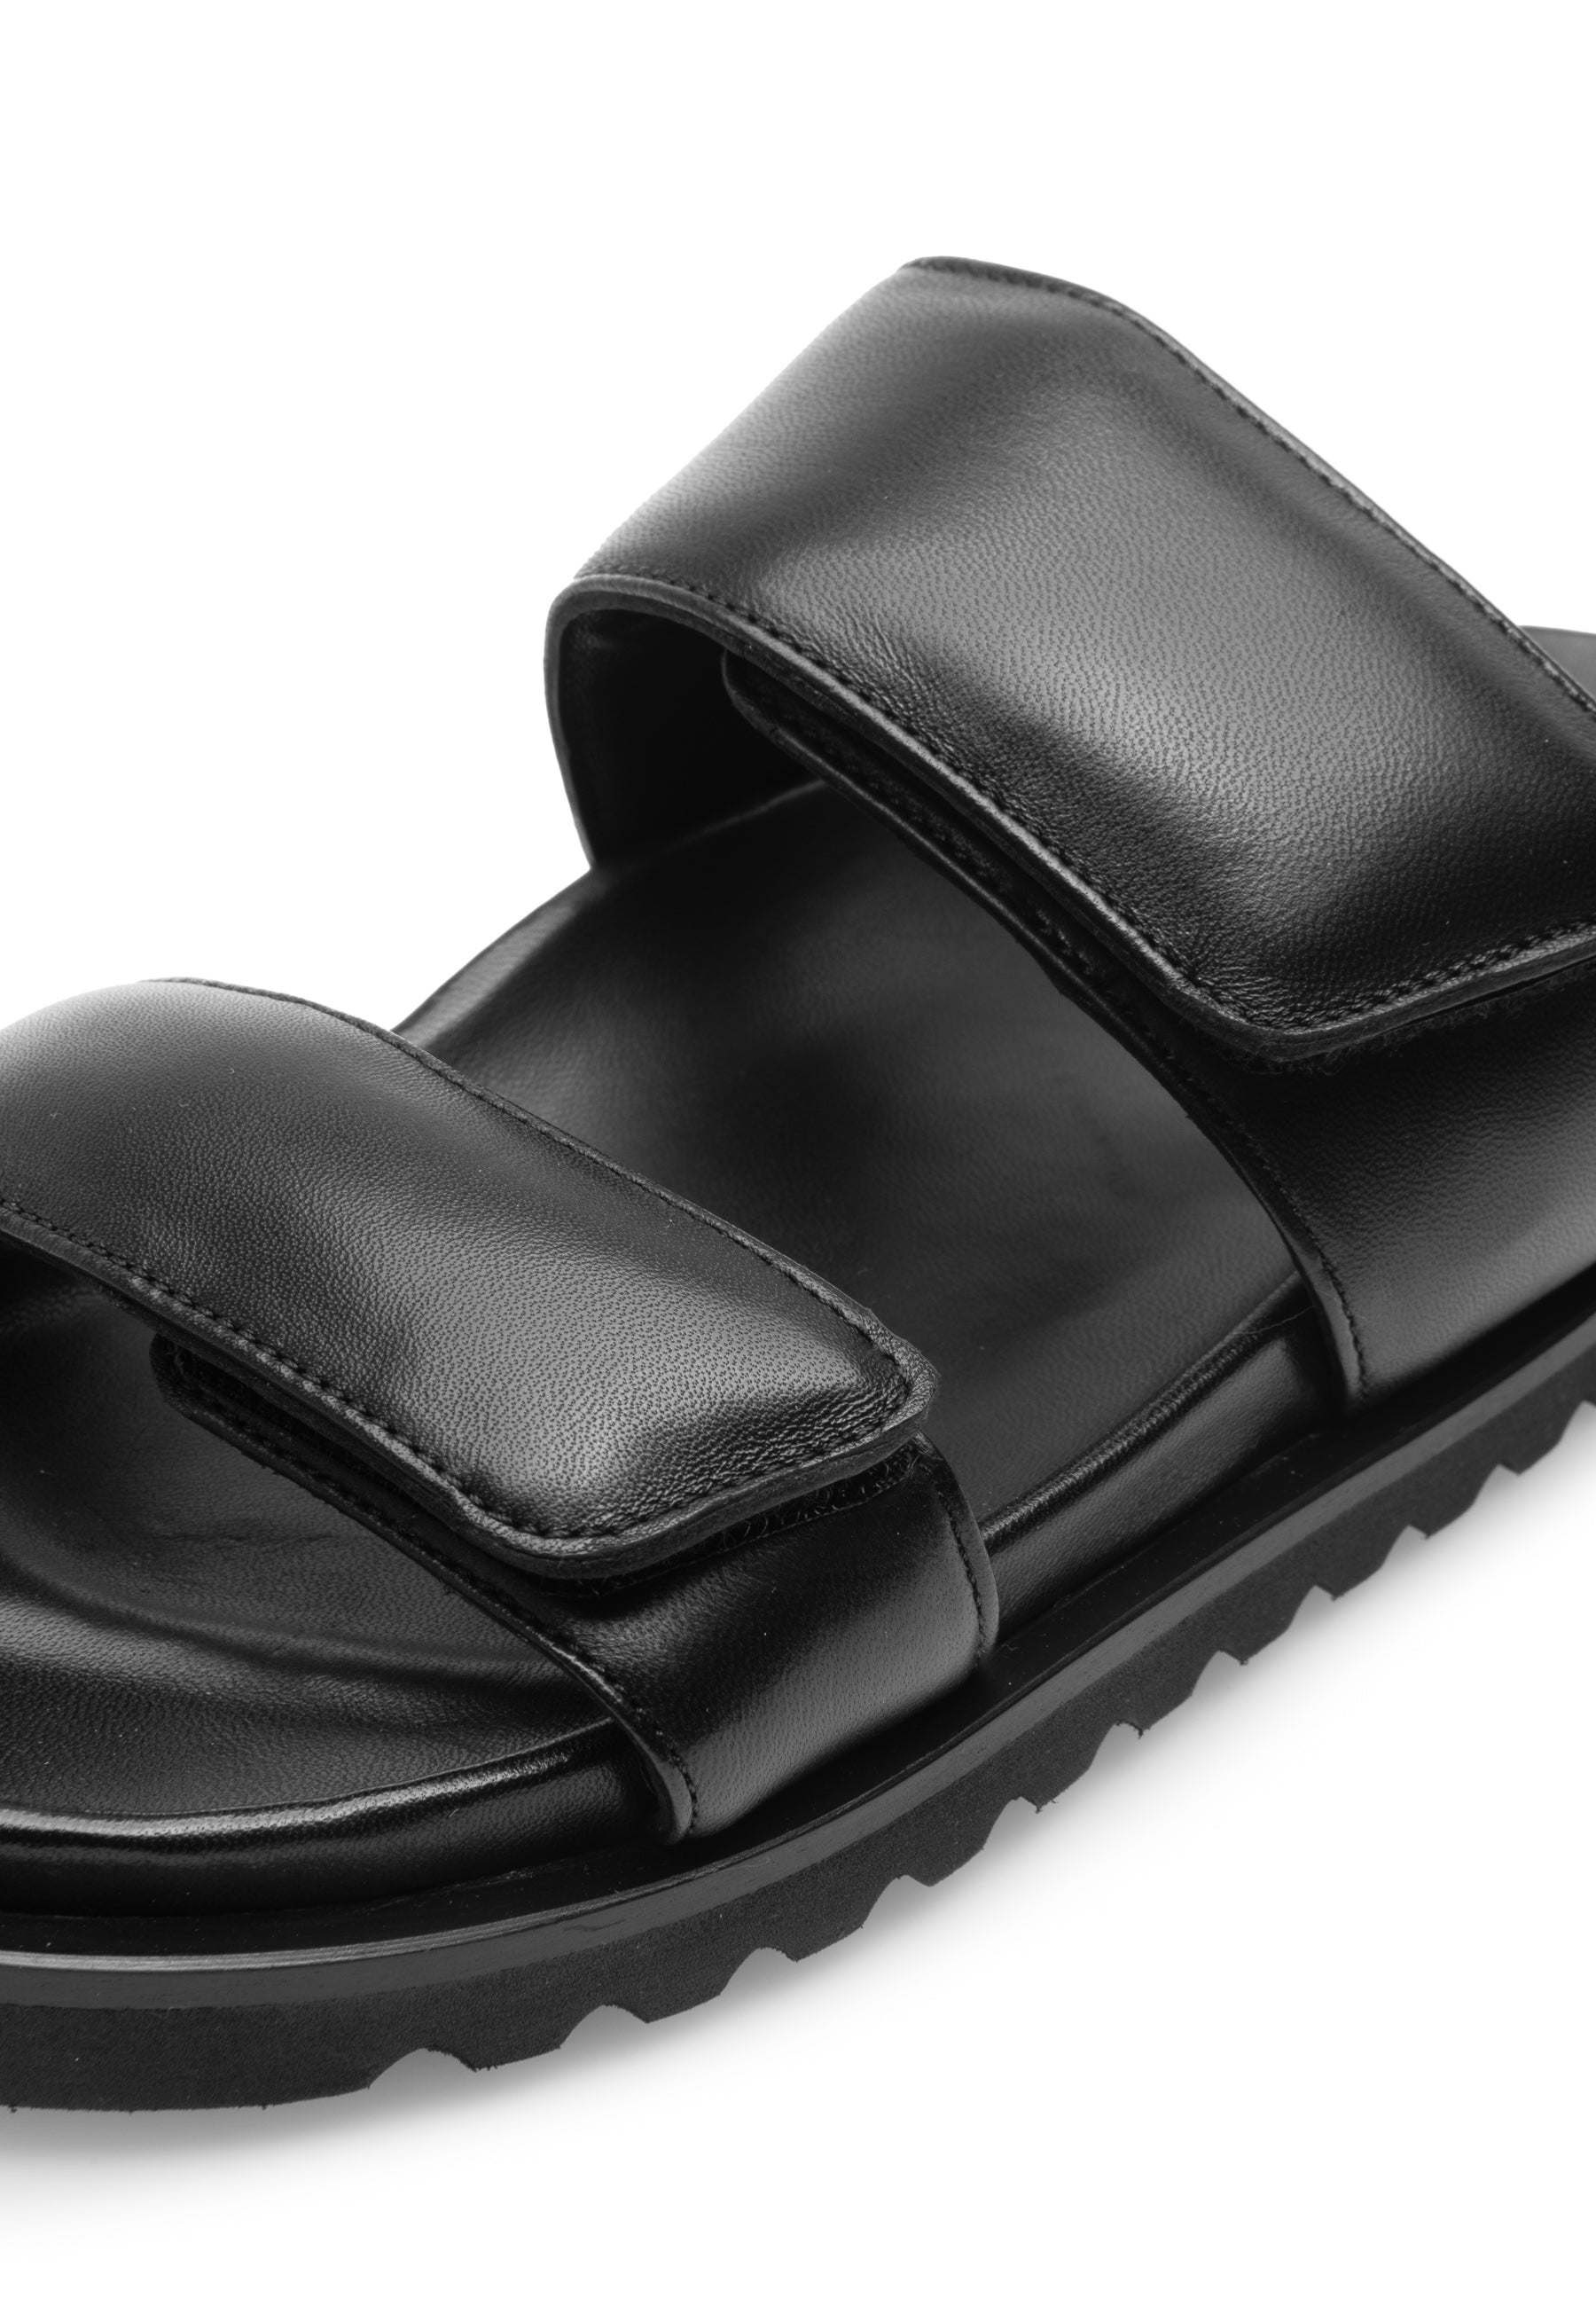 Corine Black Leather Puffy Sandals LAST1516 - 6